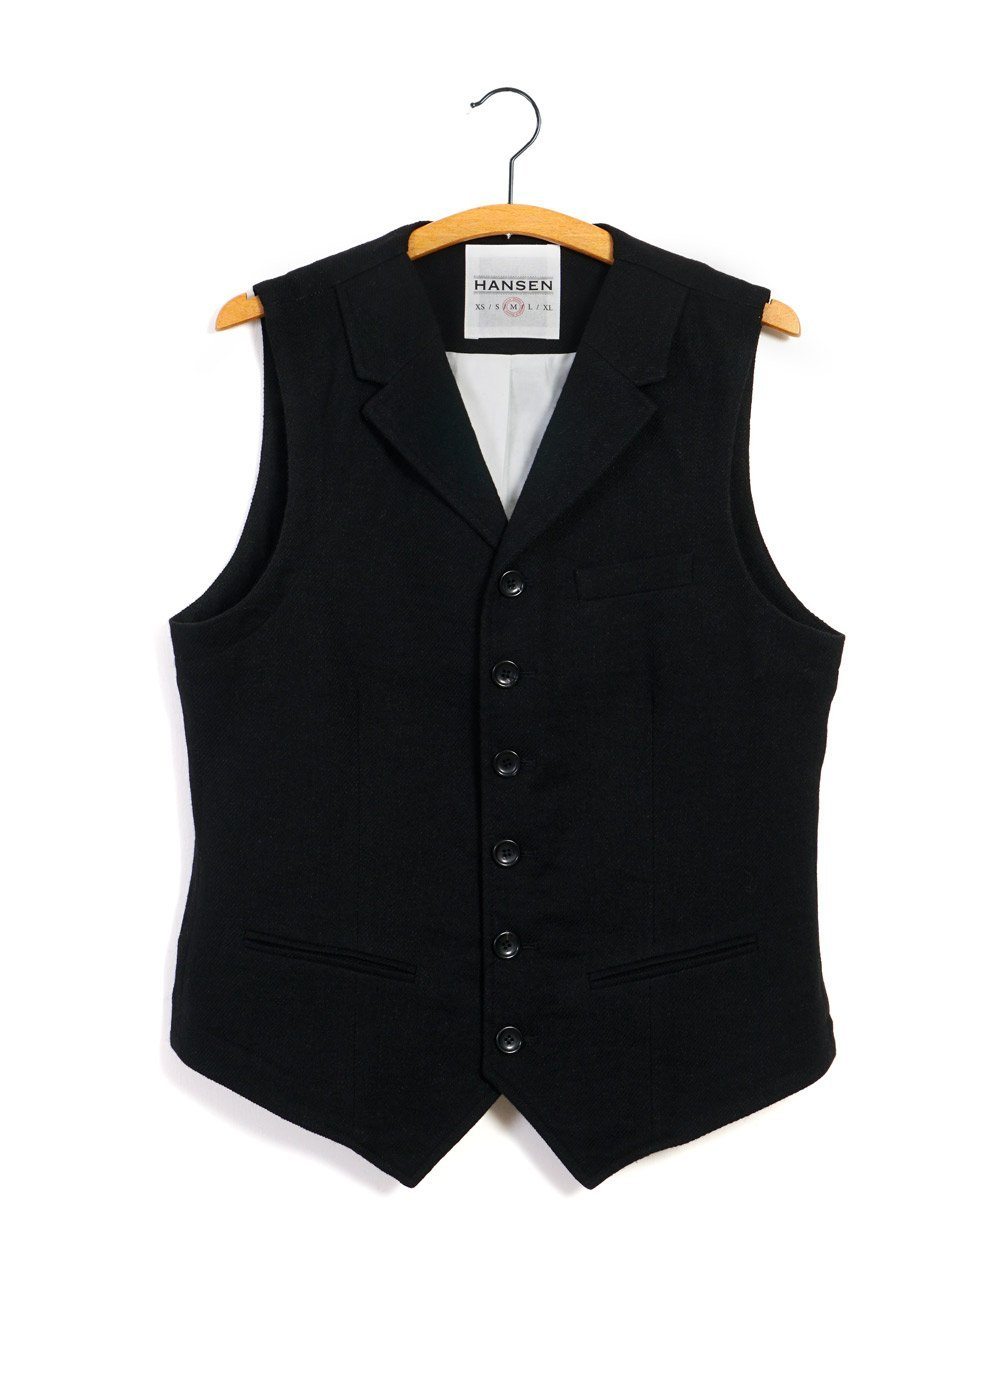 HANSEN Garments - WILLIAM | Lapel Waistcoat | Black - HANSEN Garments